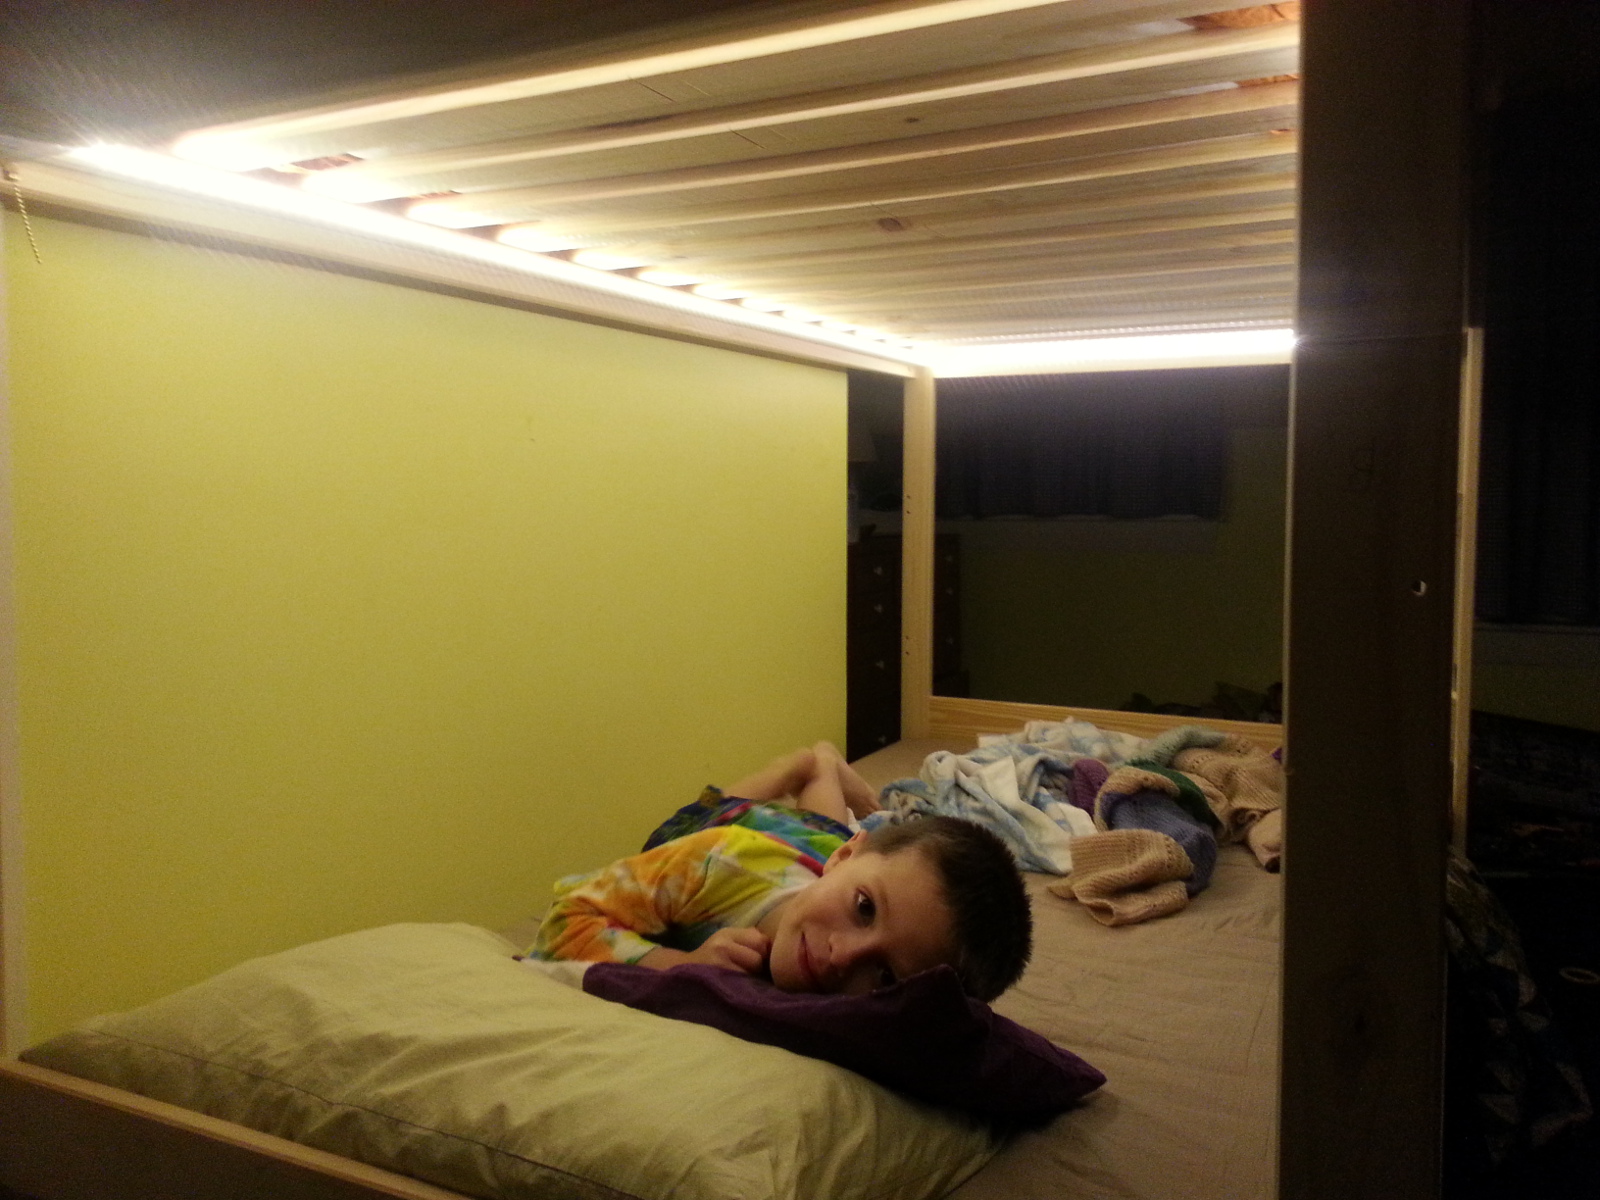 Ikea bunk bed, LED lighting